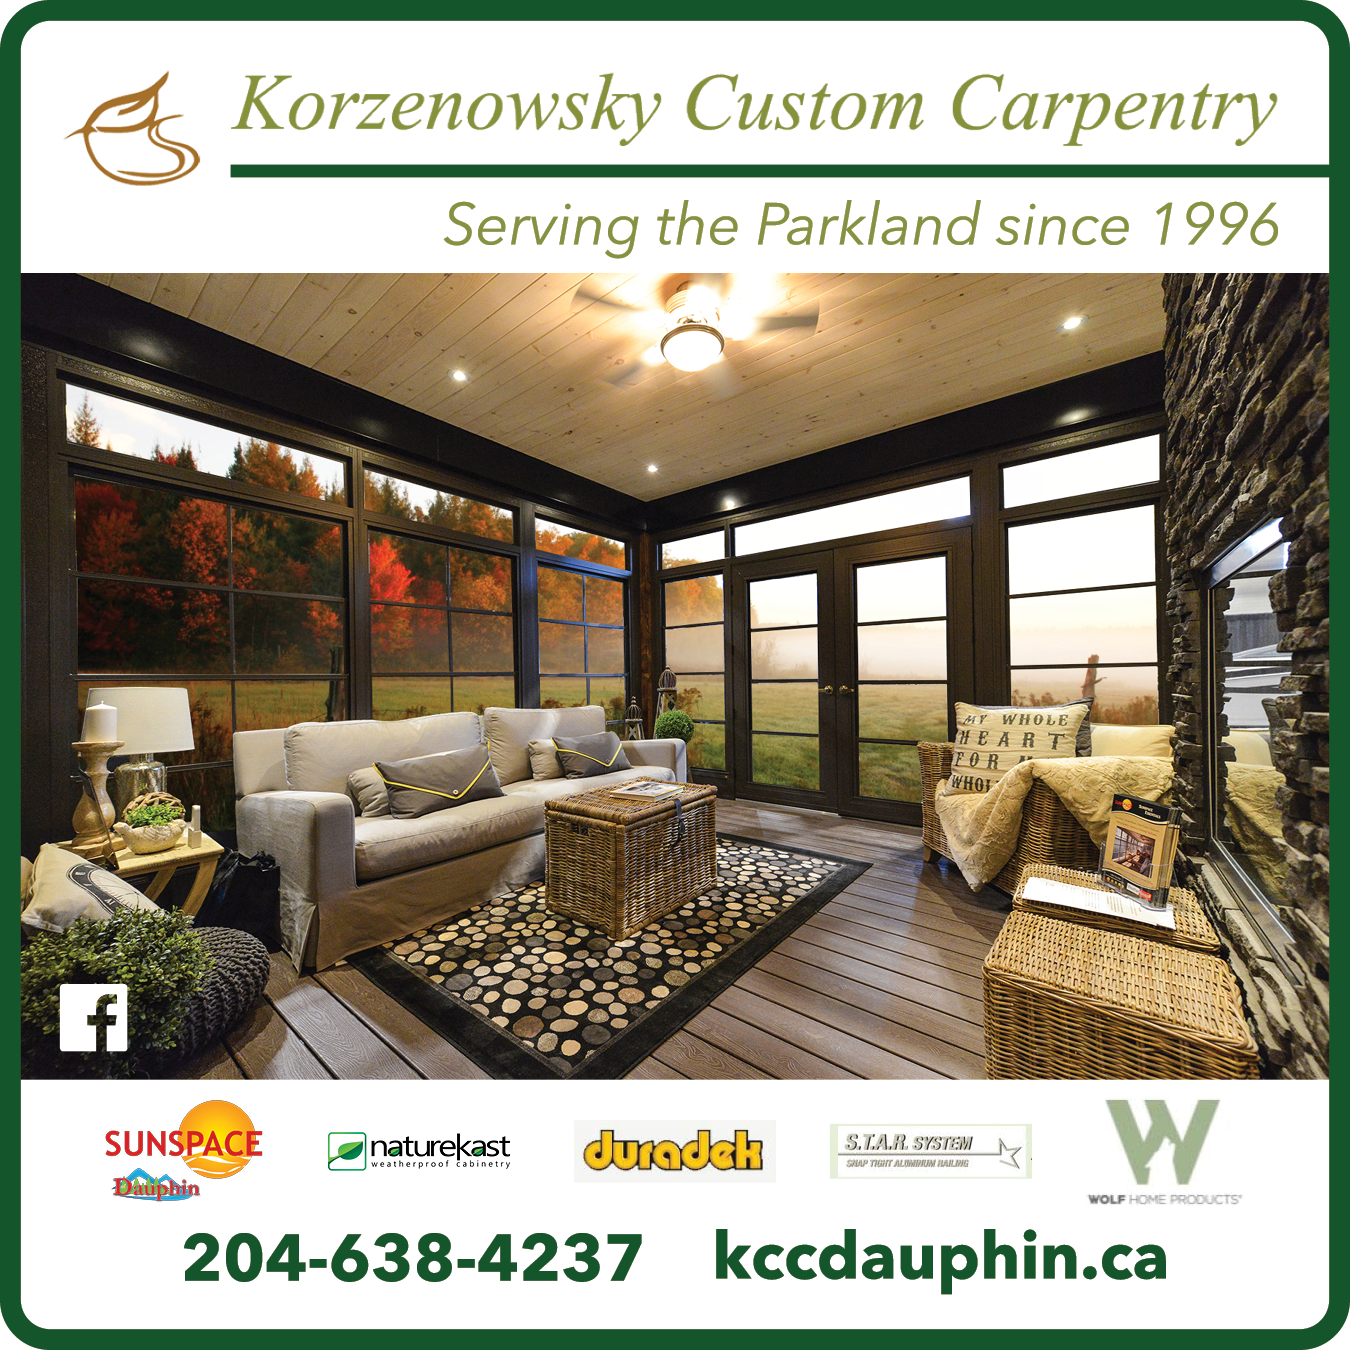 Korzenowsky Custom Carpentry